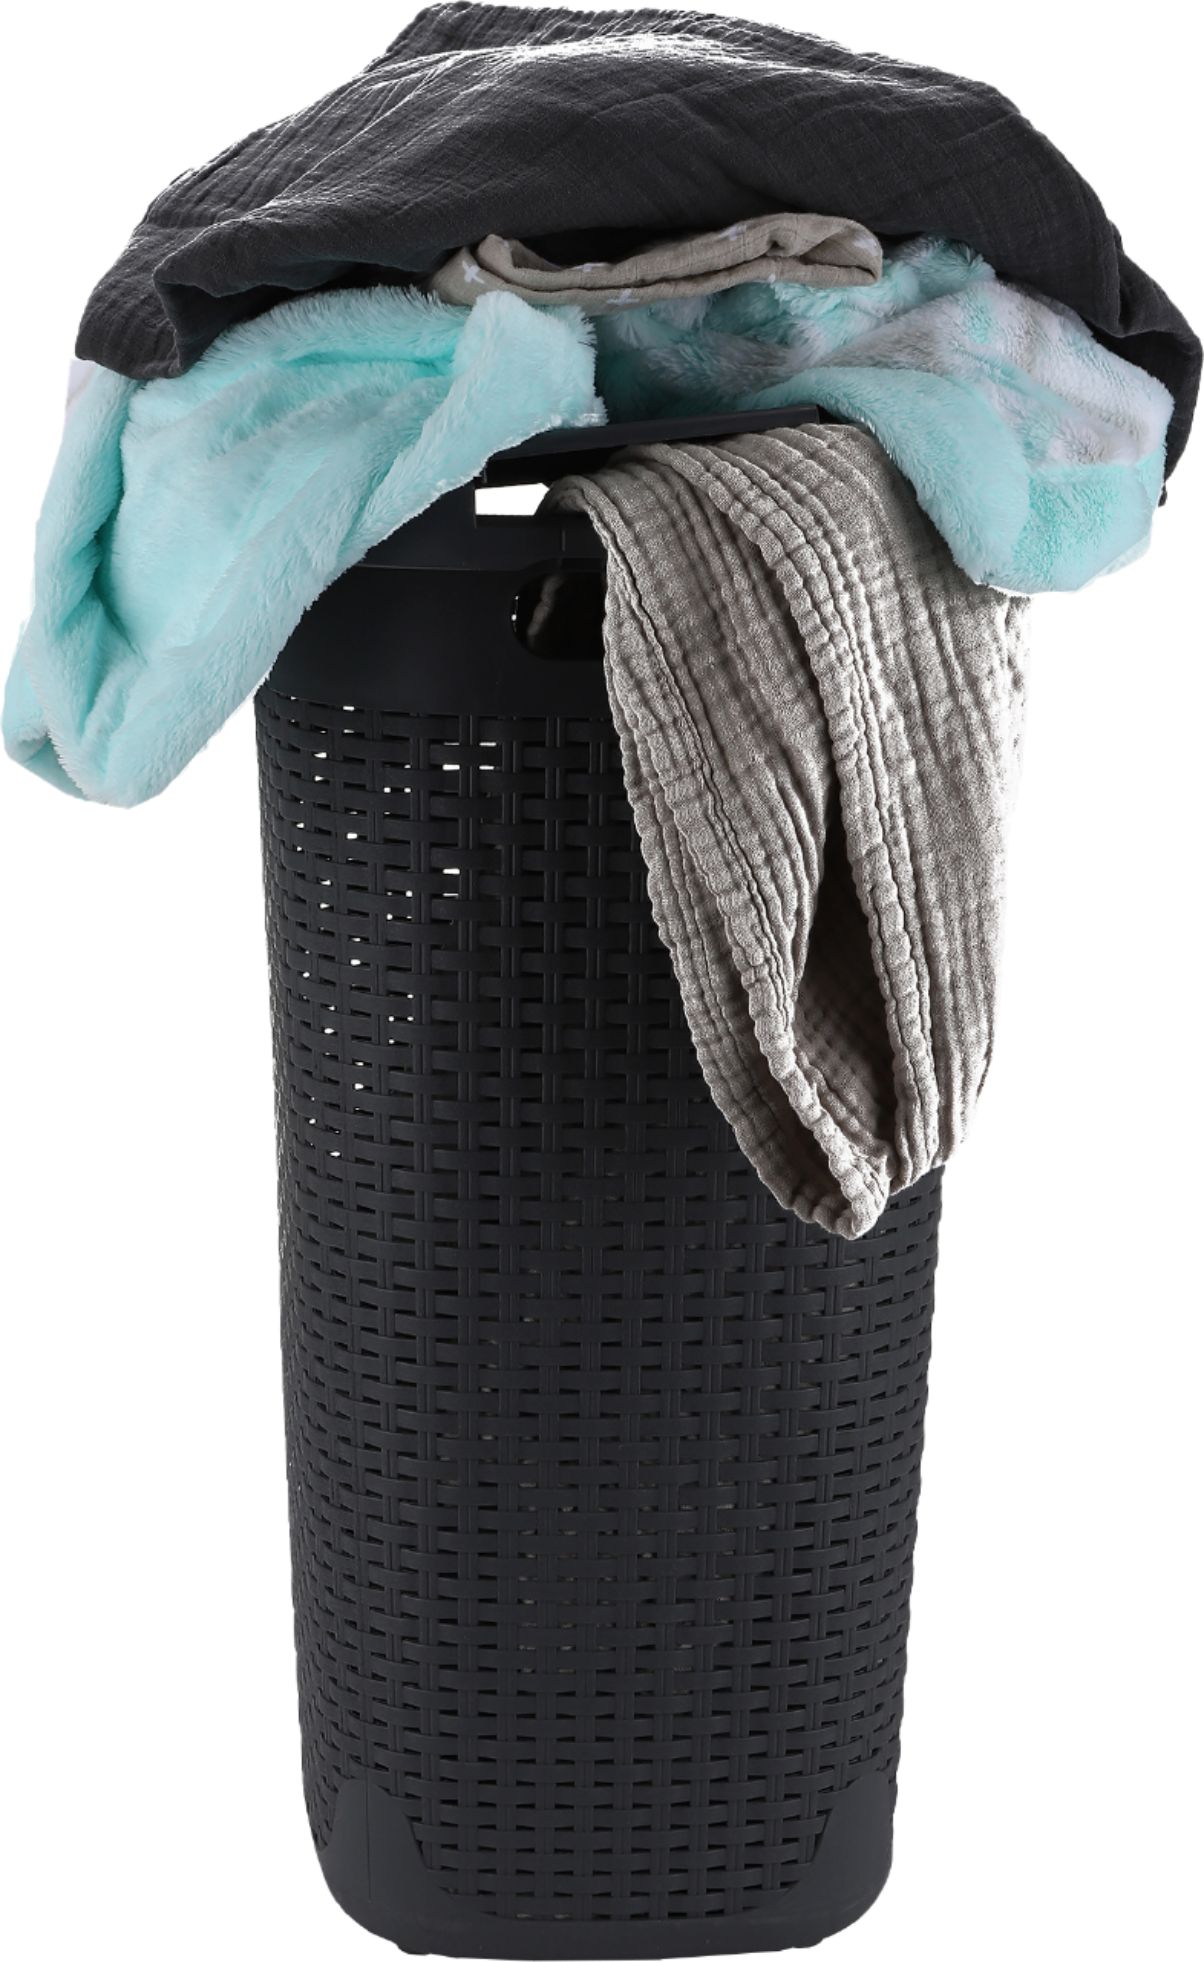 Mind Reader 60 L Laundry Hamper Basket Washing Bin Dirty Clothes Storage Gray 